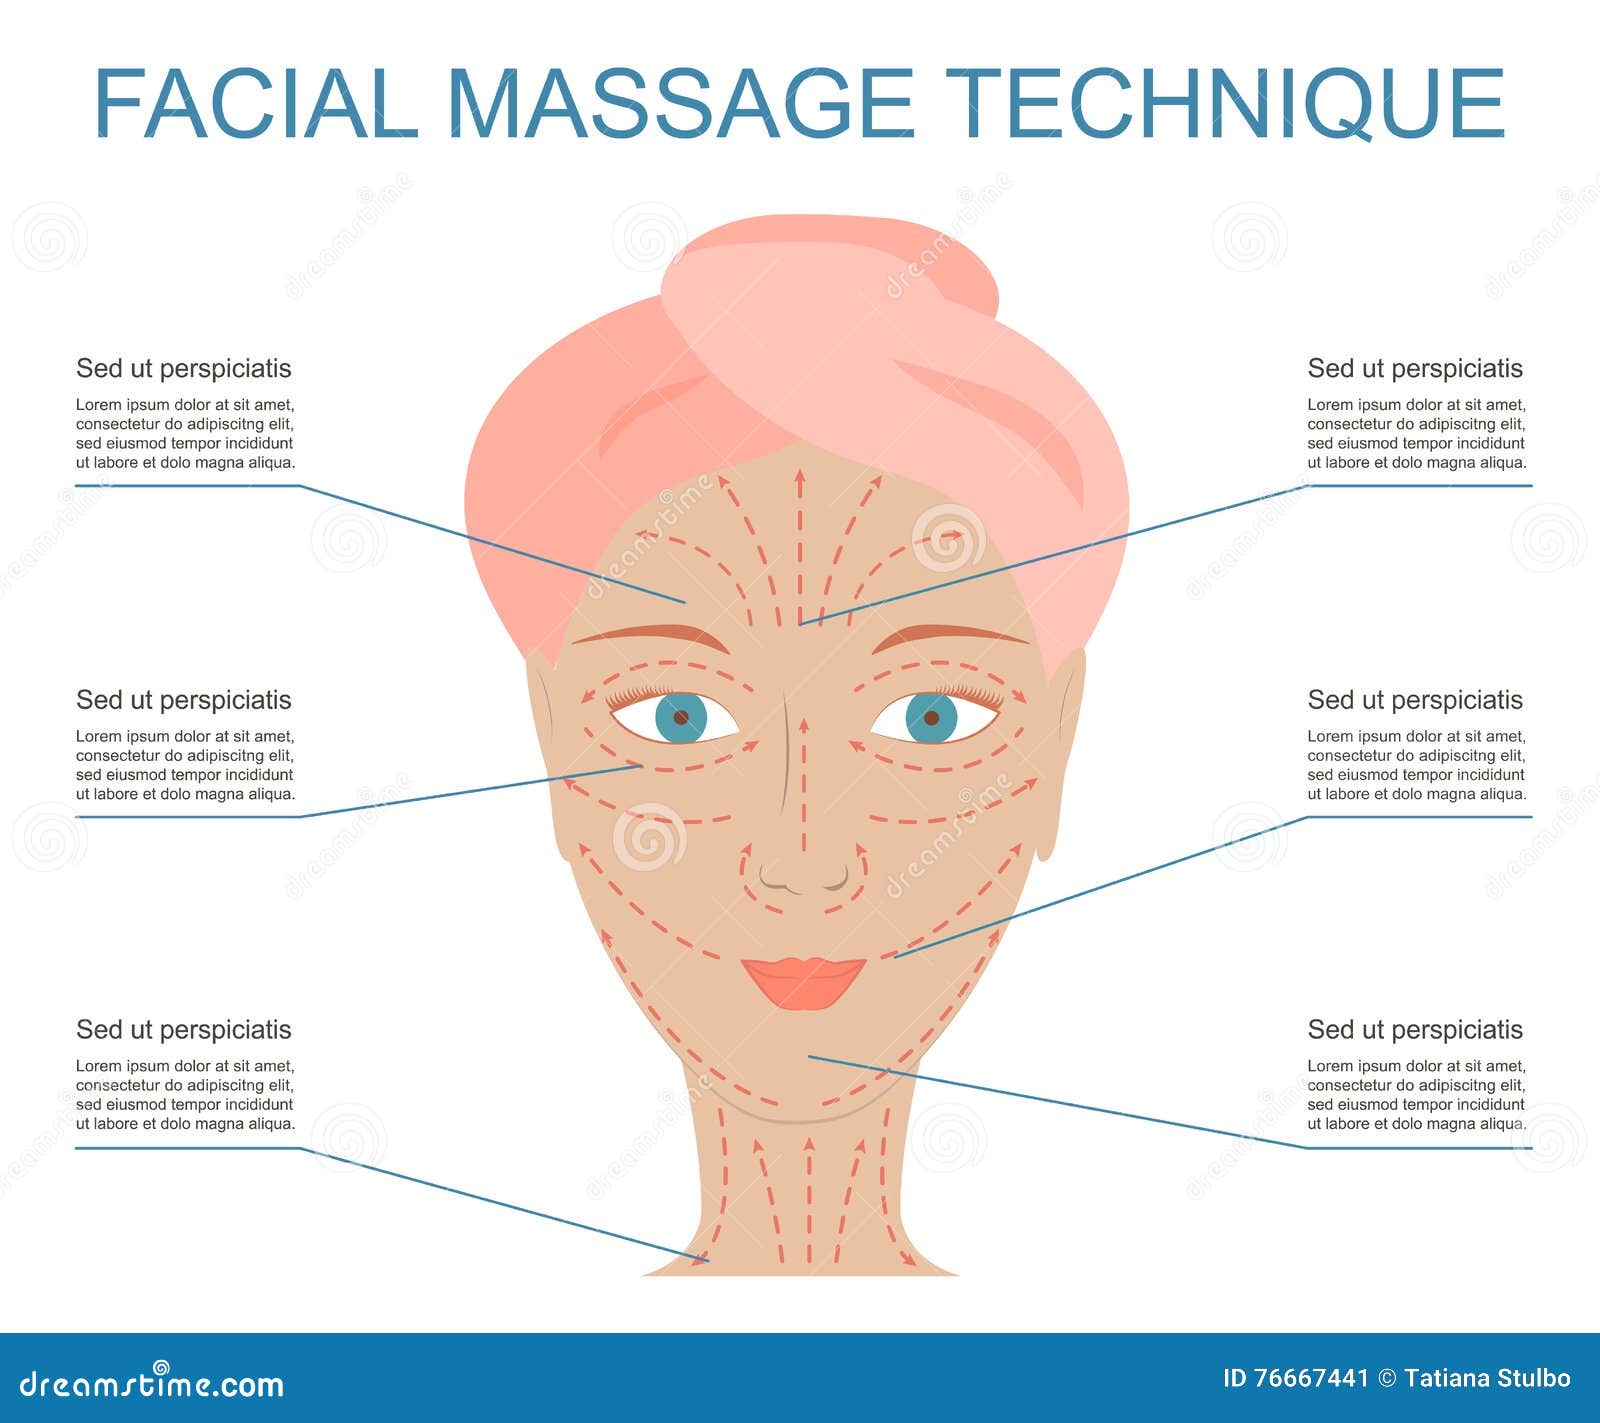 Technique Buccal Facial Massage Telegraph